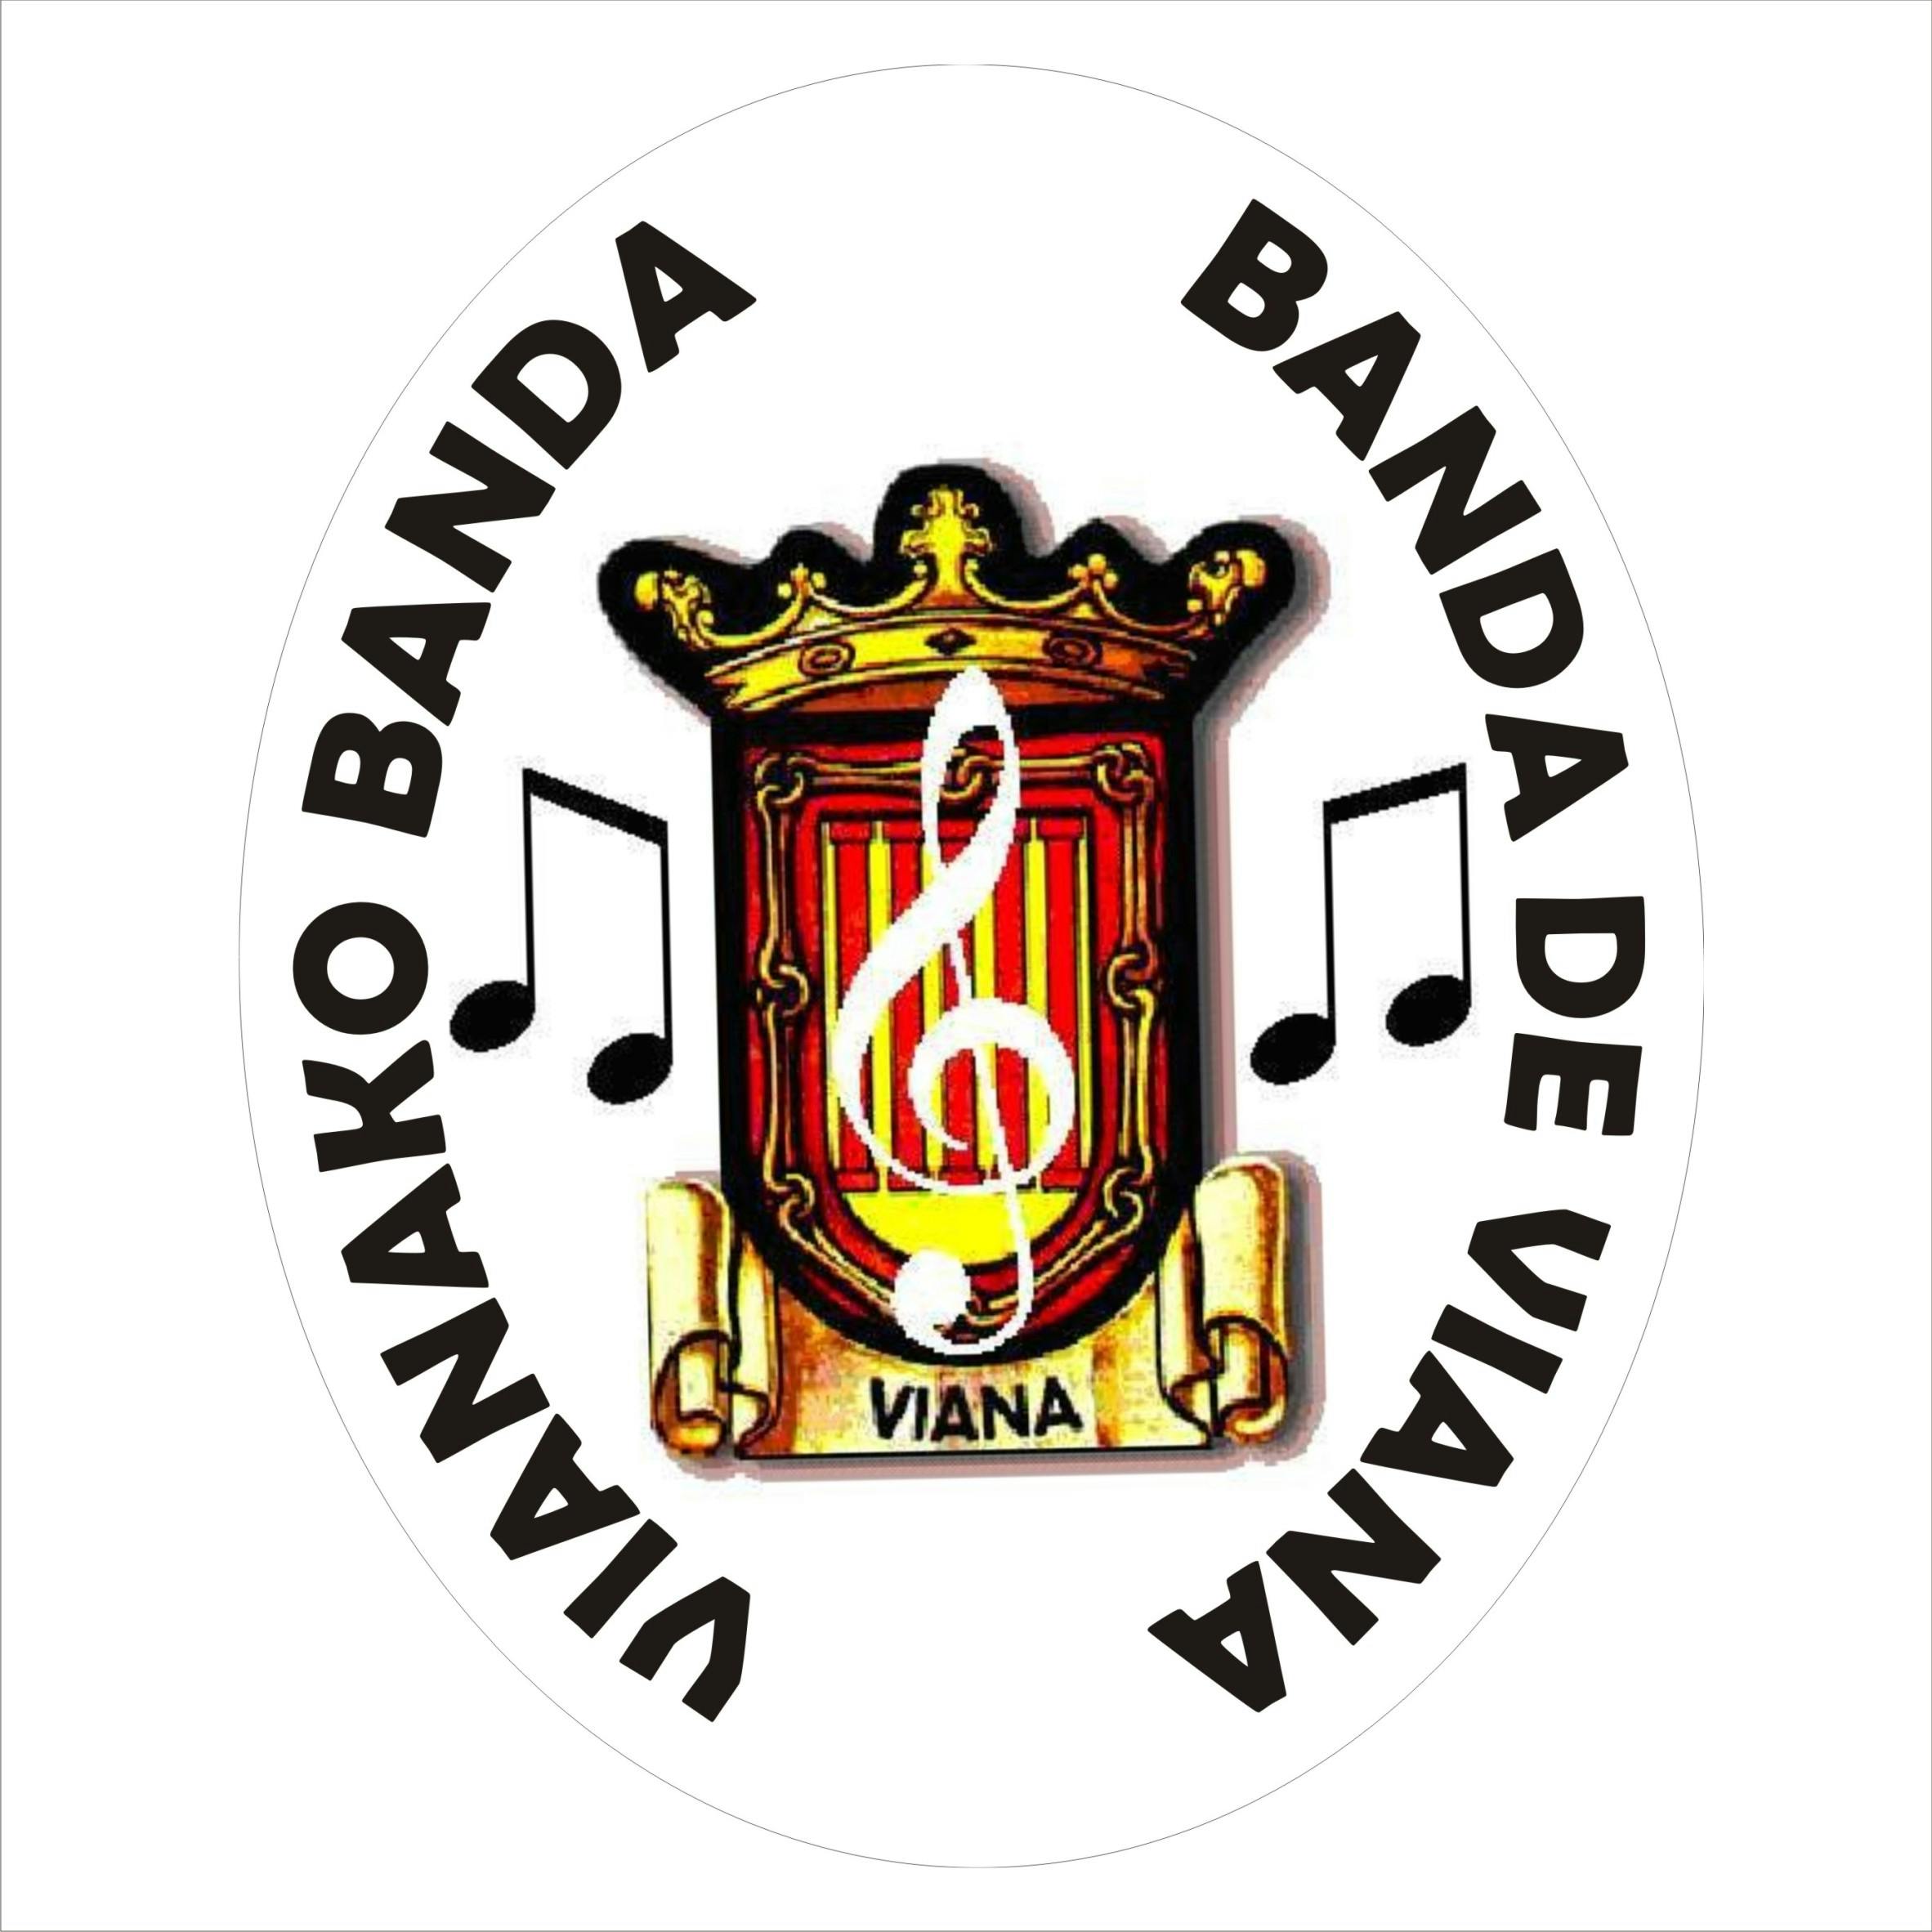 Banda de Viana